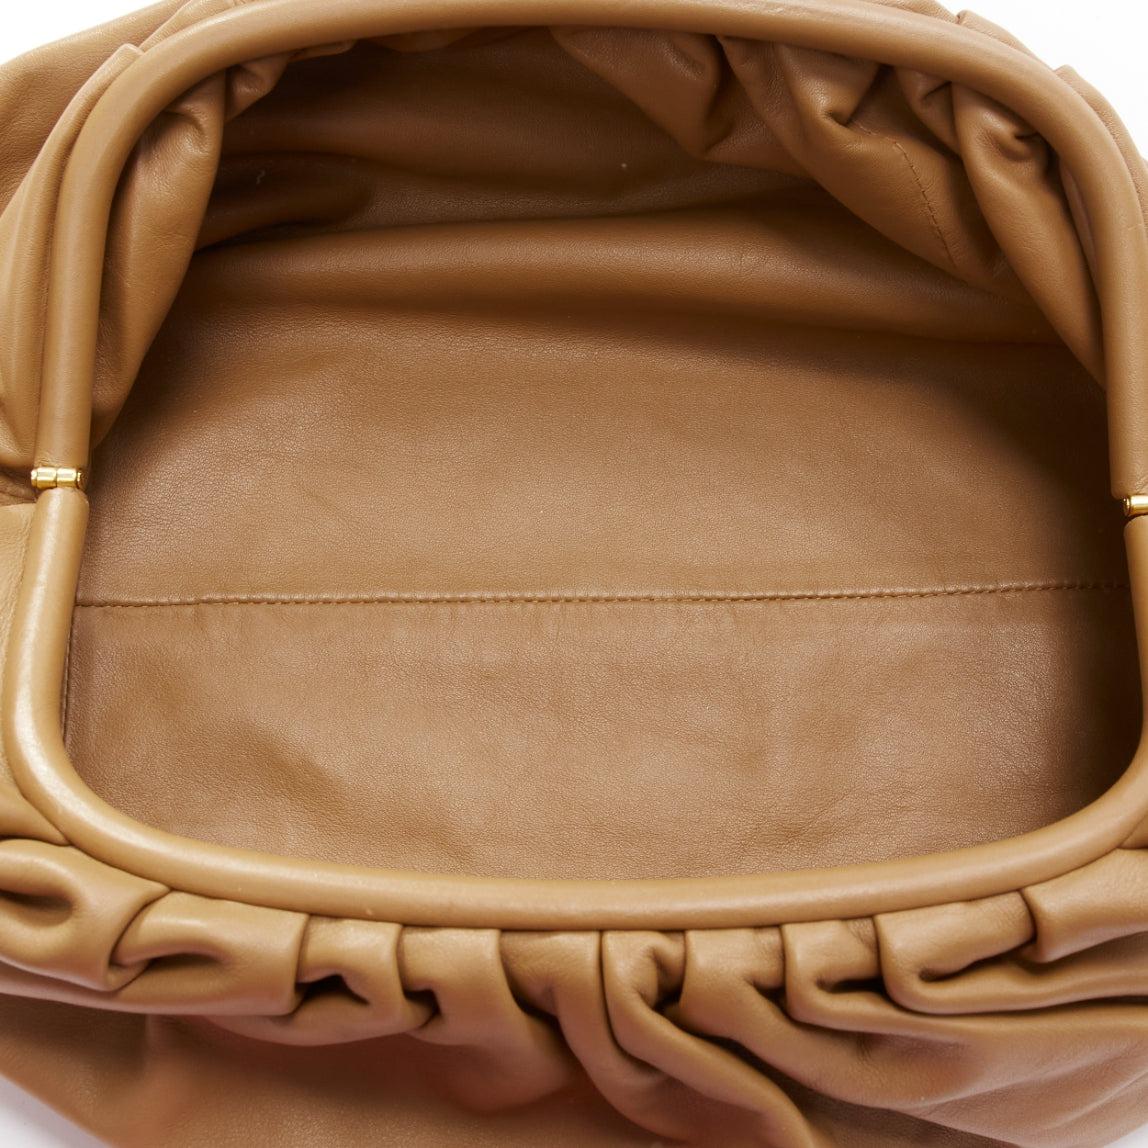 BOTTEGA VENETA The Pouch brown leather dumpling clutch bag For Sale 4